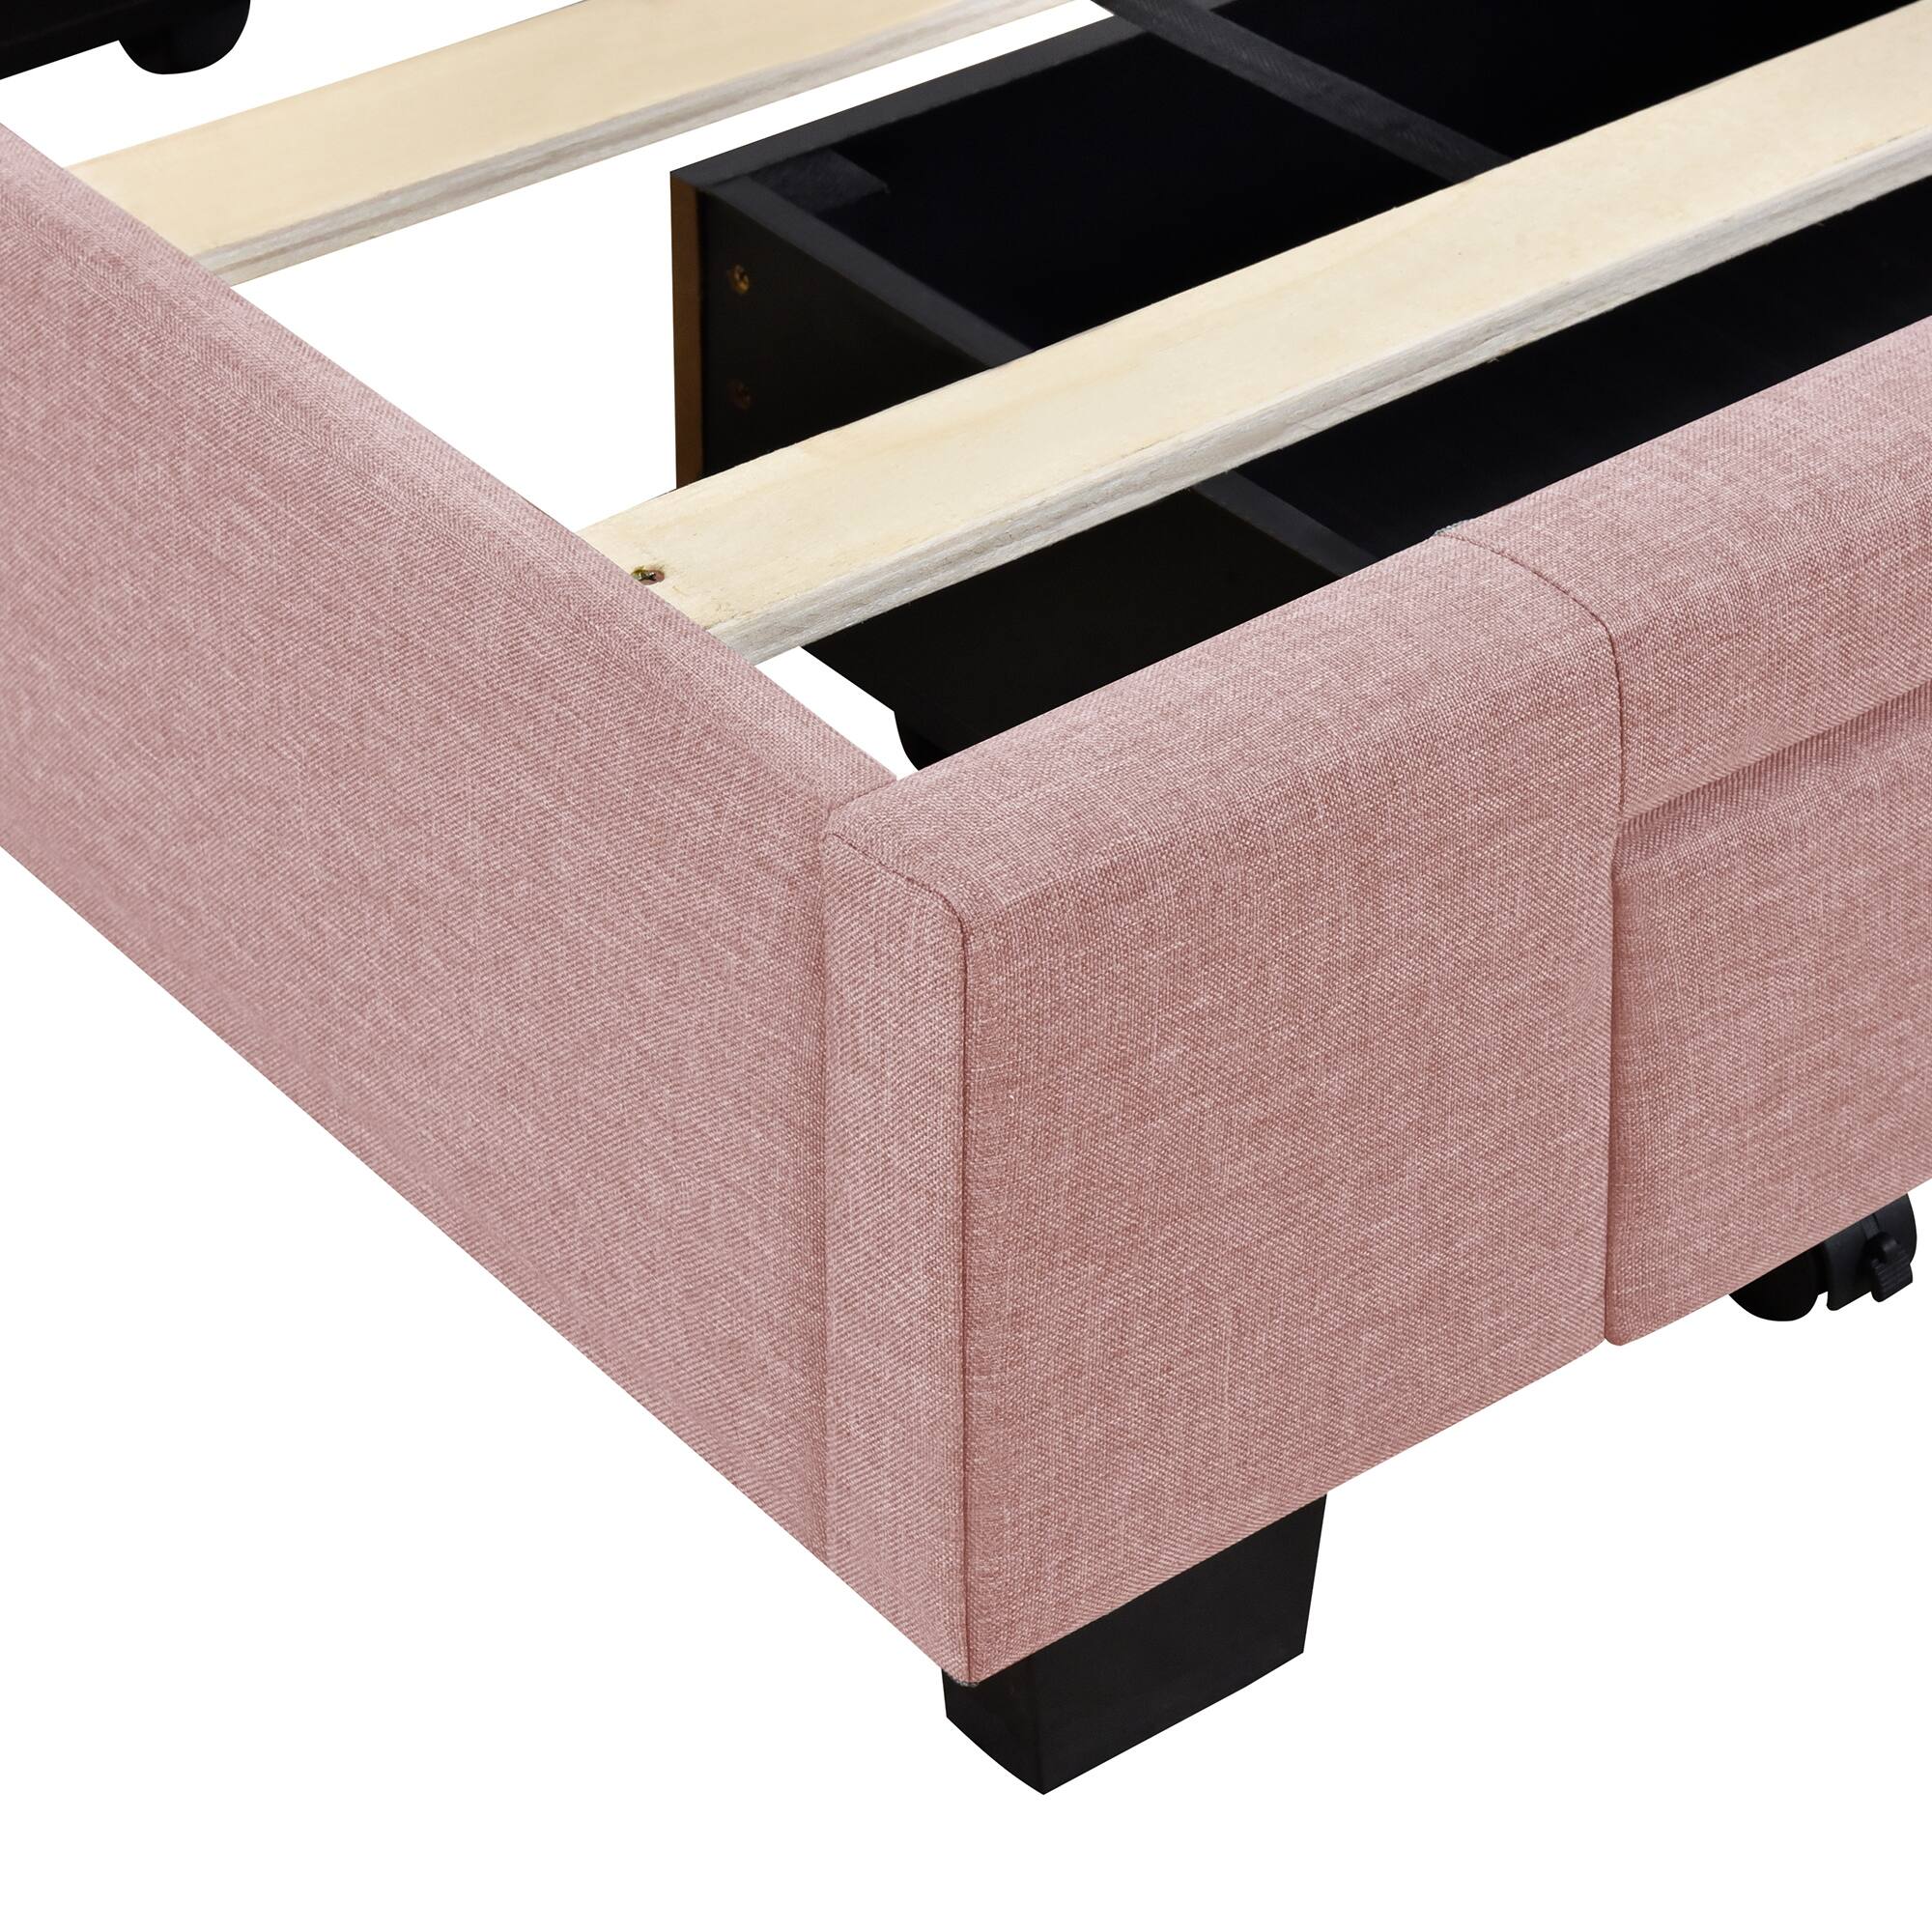 Wooden Queen Size 3 Drawers Storage Bed Linen Upholstered Platform Bed